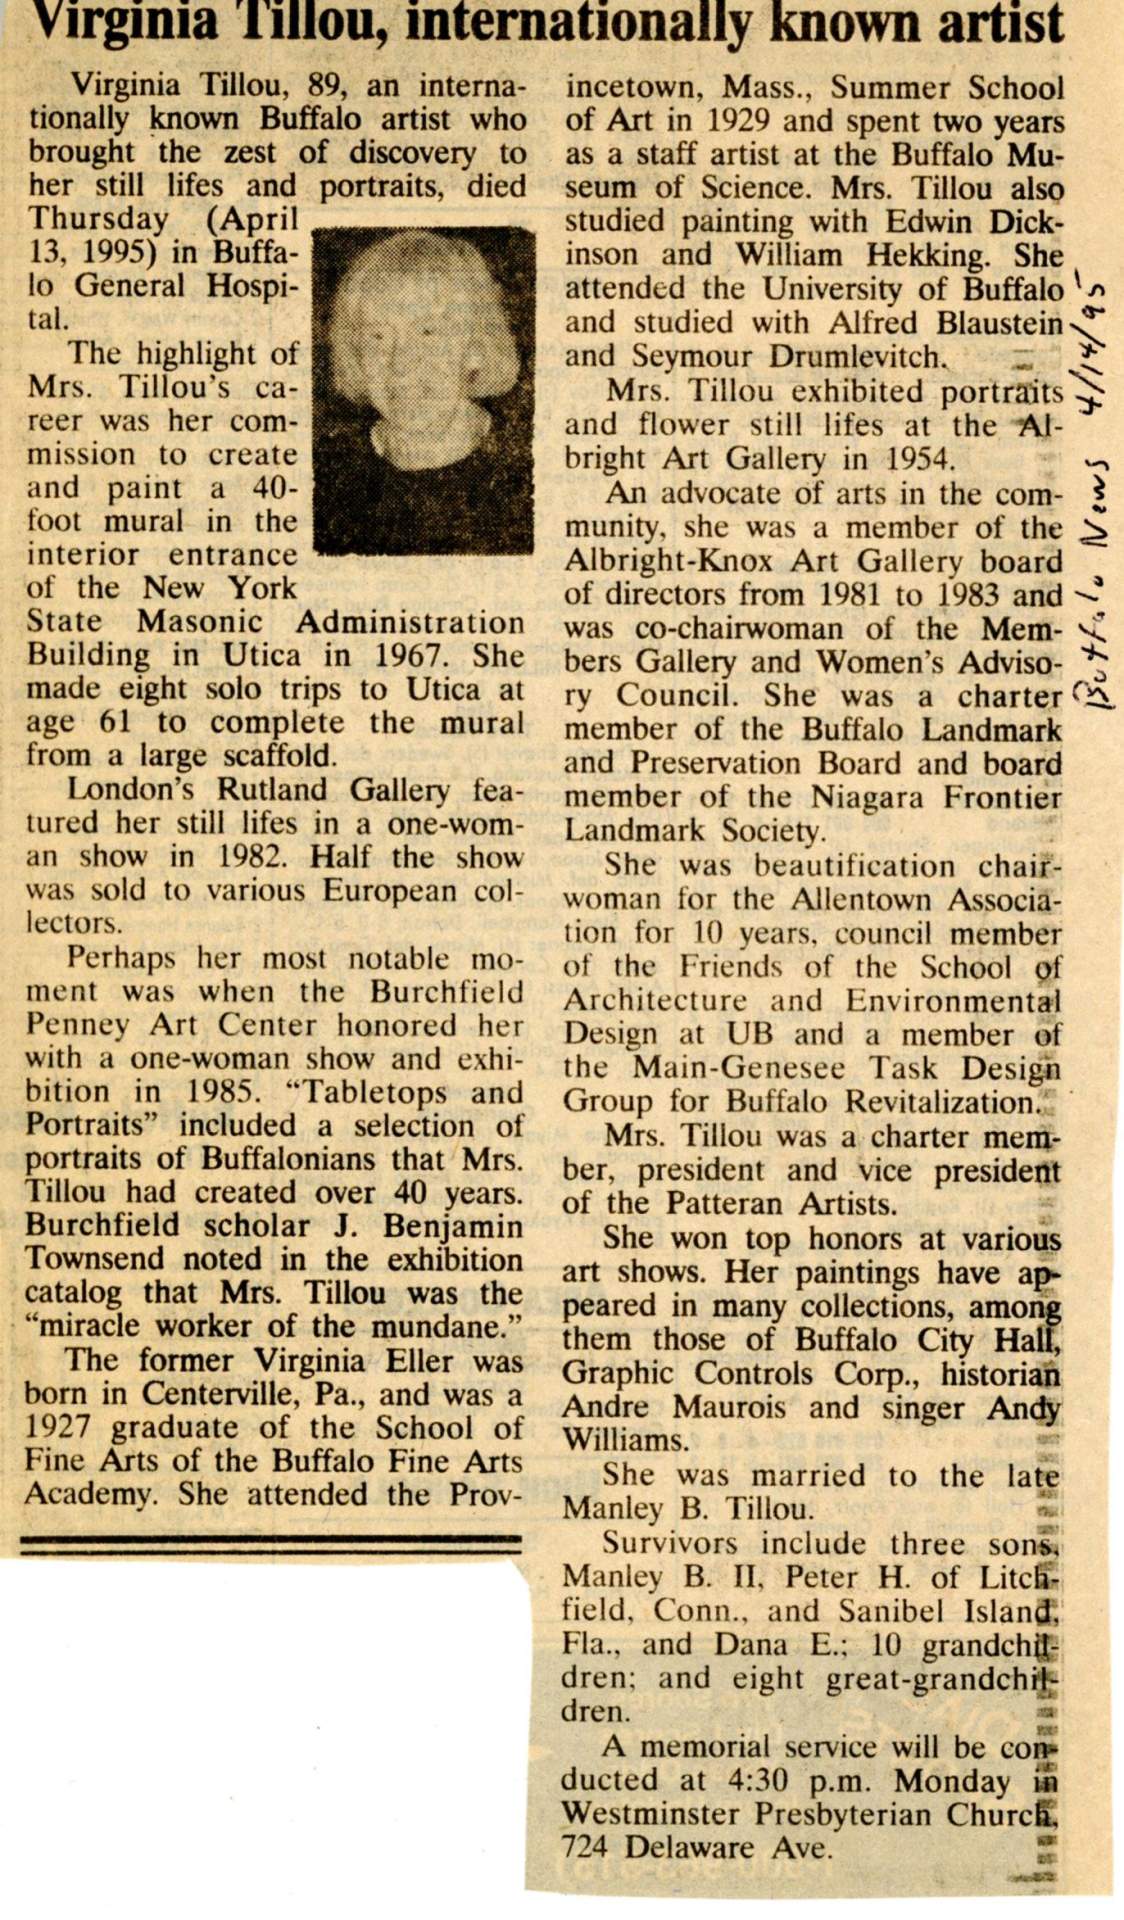 Virginia Tillou, Internationally Known Artist [Buffalo News 4/14/95]